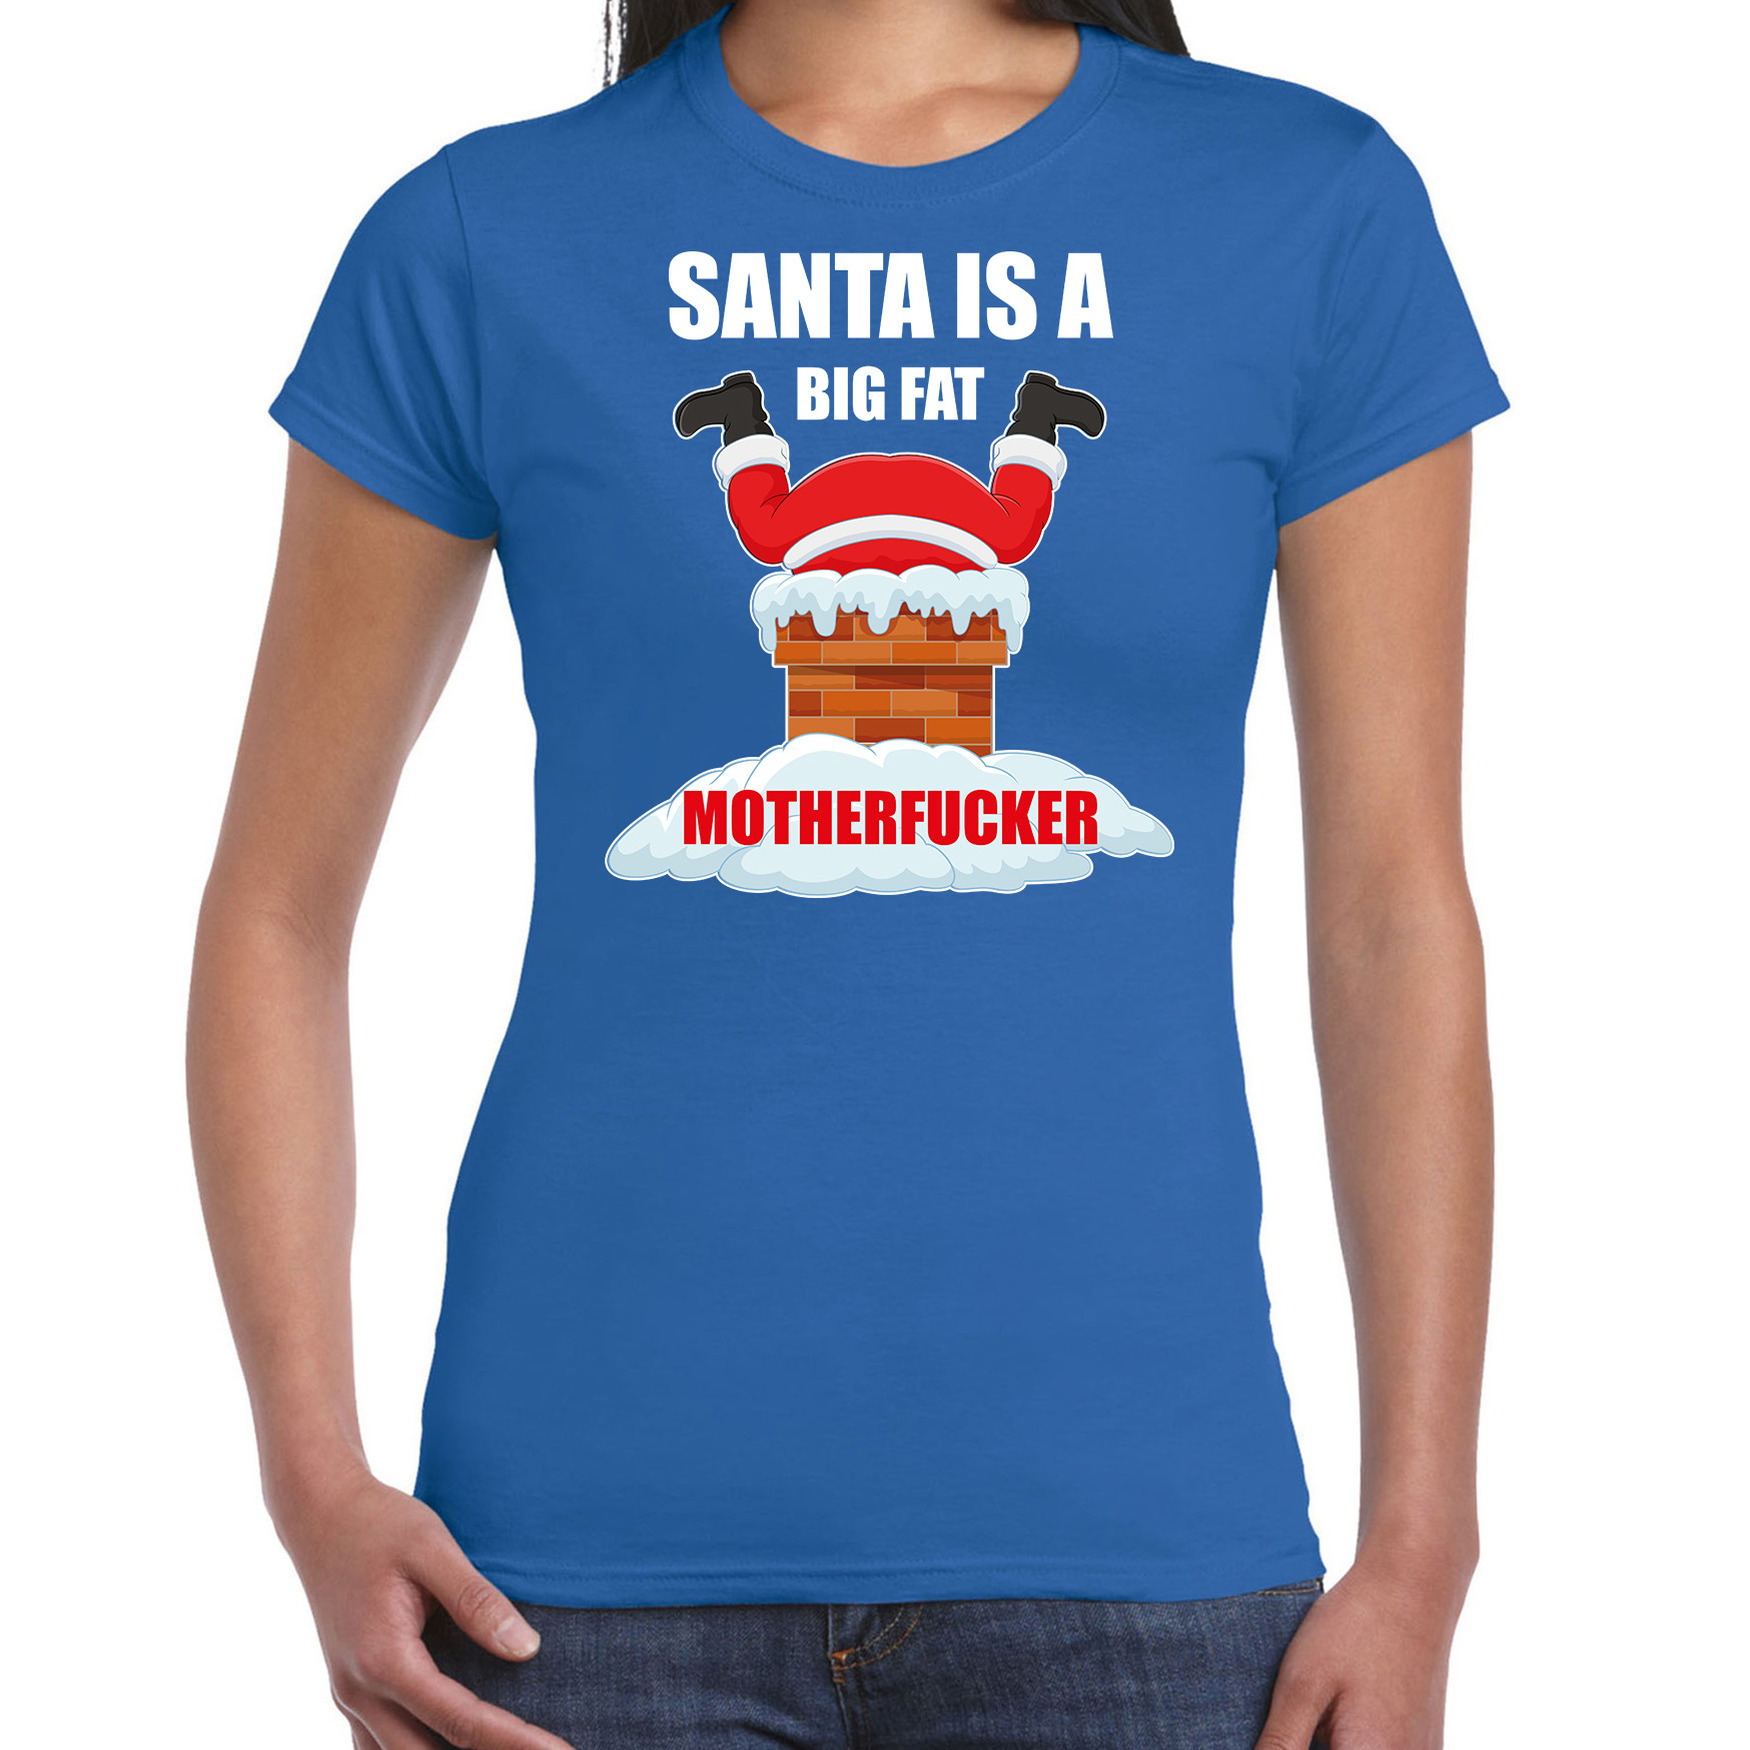 Blauw Kerstshirt-Kerstkleding Santa is a big fat motherfucker voor dames